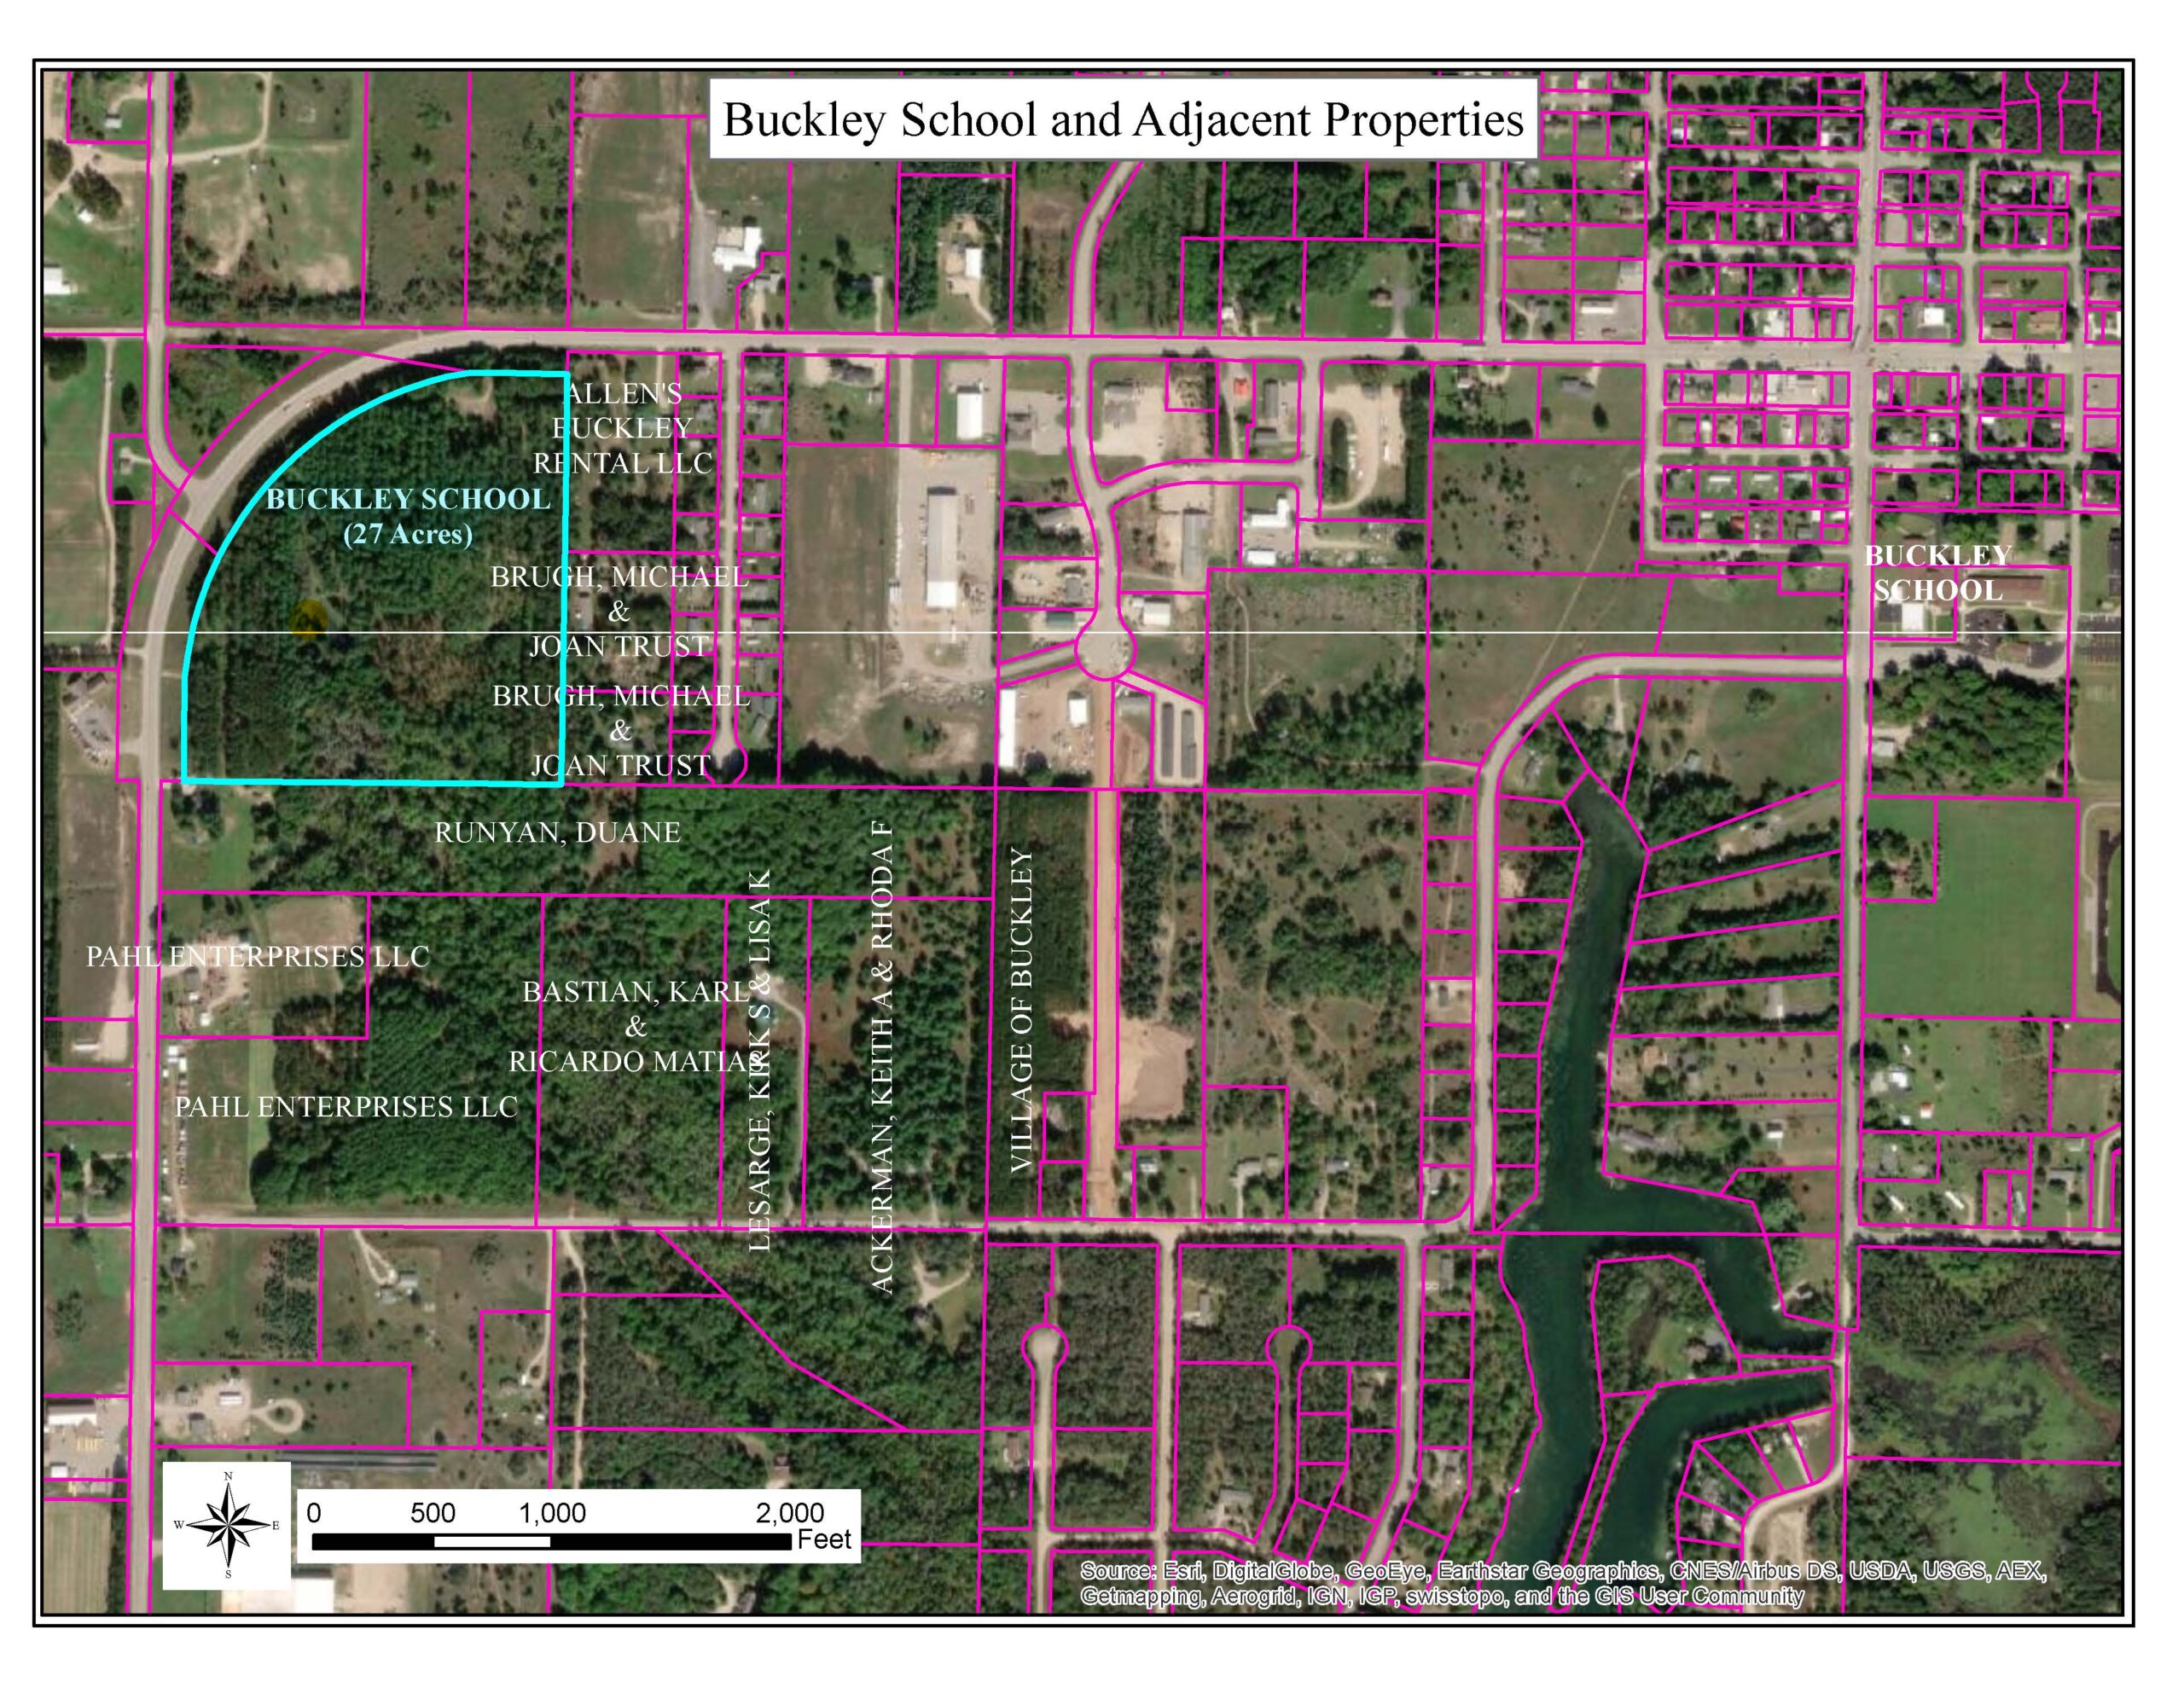 Buckley_School_and_Adjacent_Properties_Aerial_Map_11_10_22